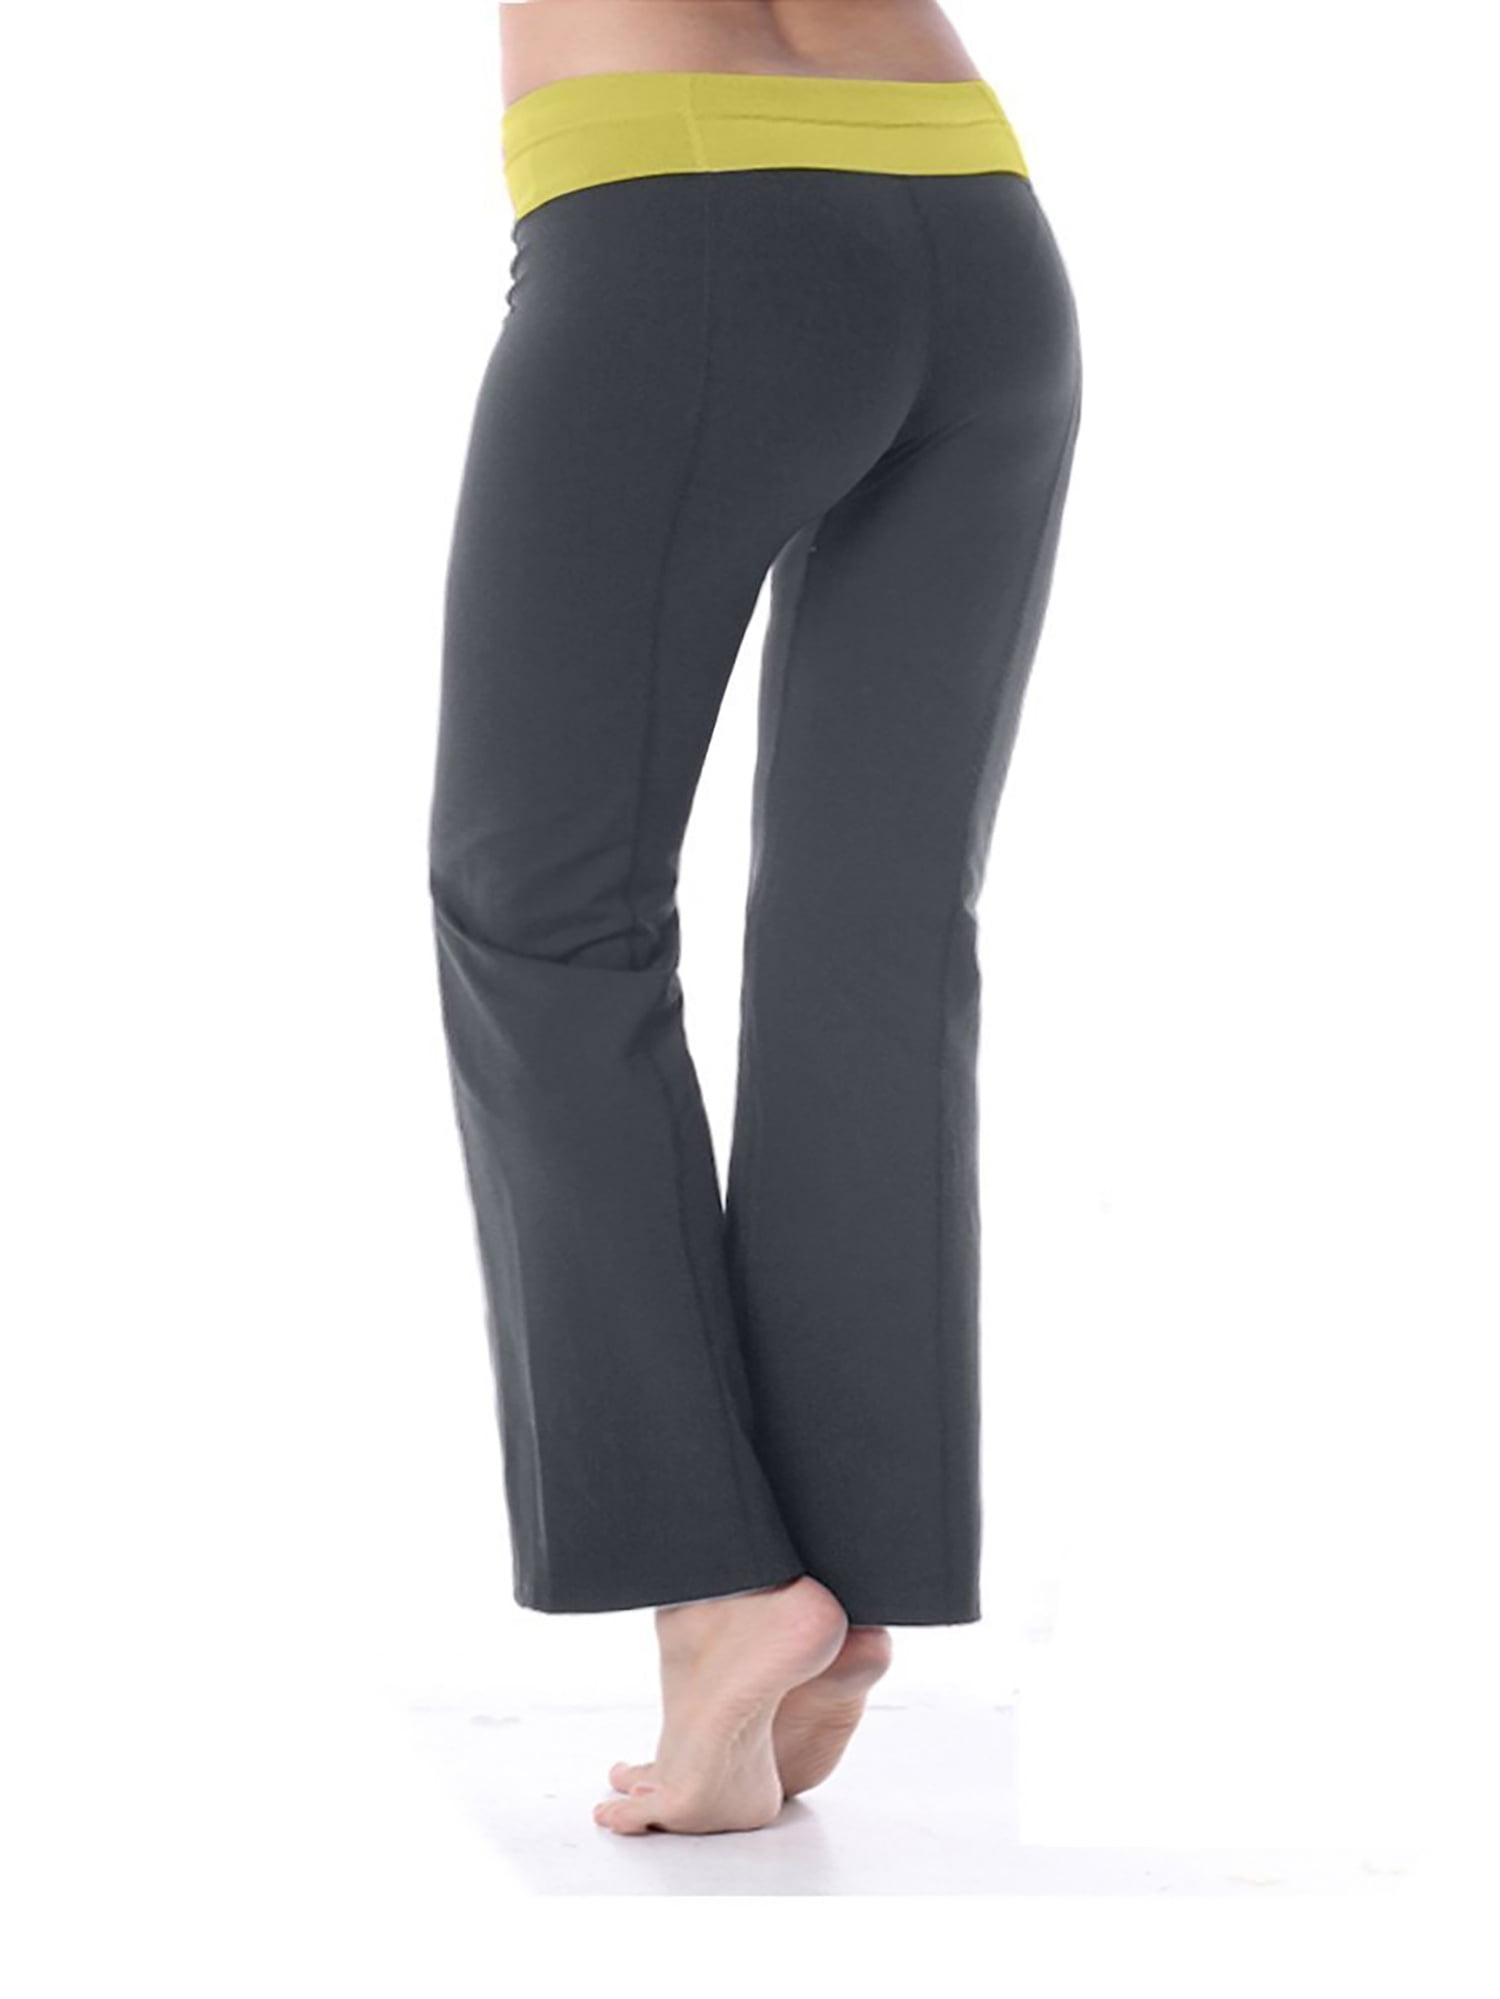 Bootcut Yoga Pants Cotton with Contrast Waistband - Walmart.com